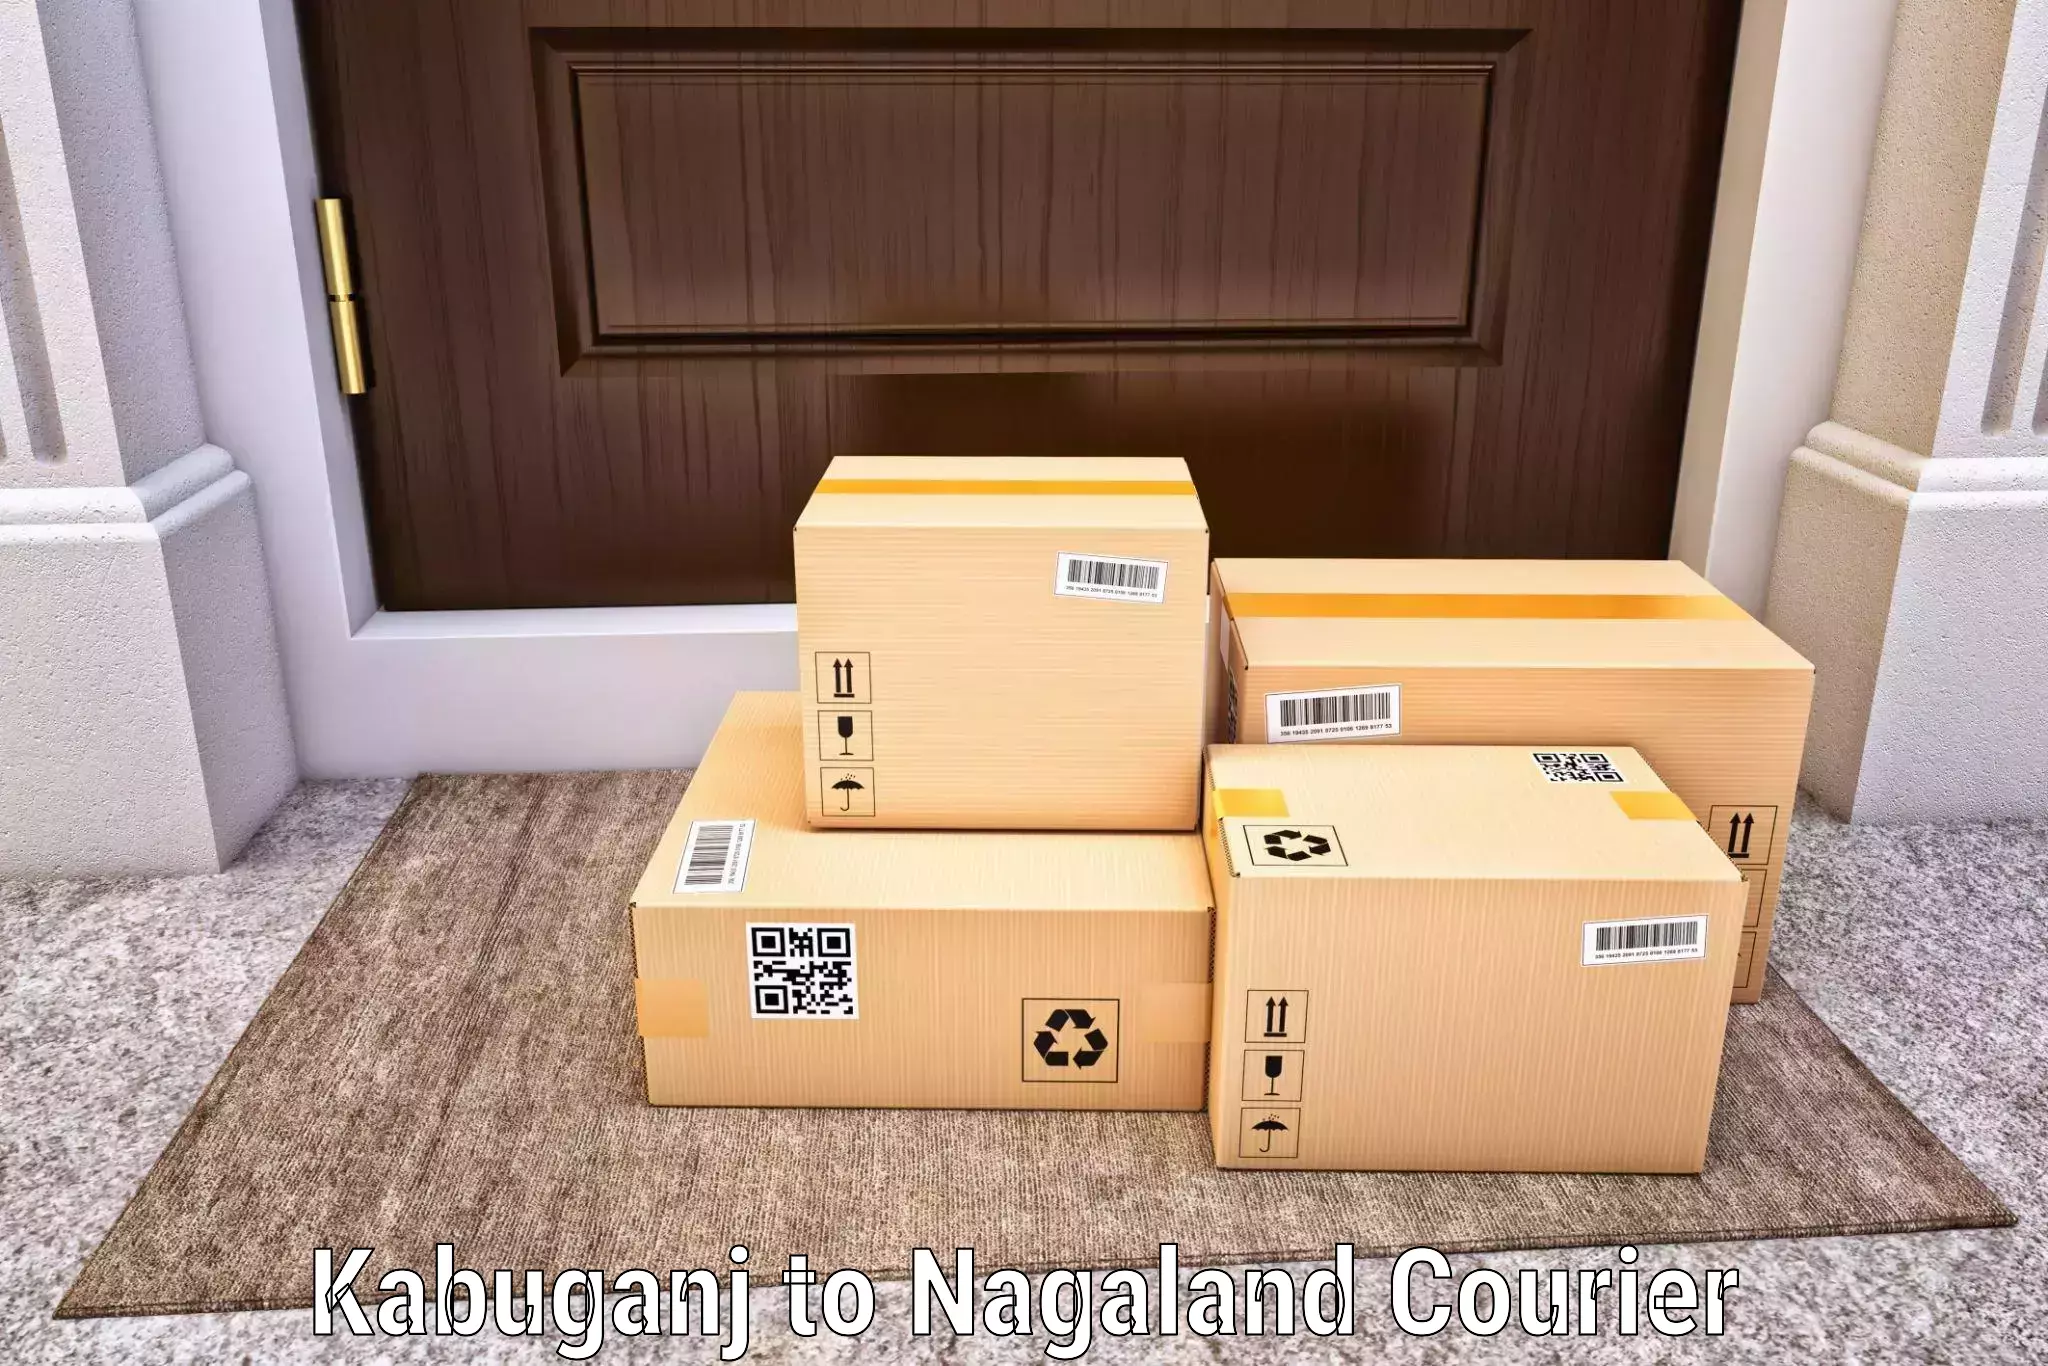 Same-day delivery options Kabuganj to Mon